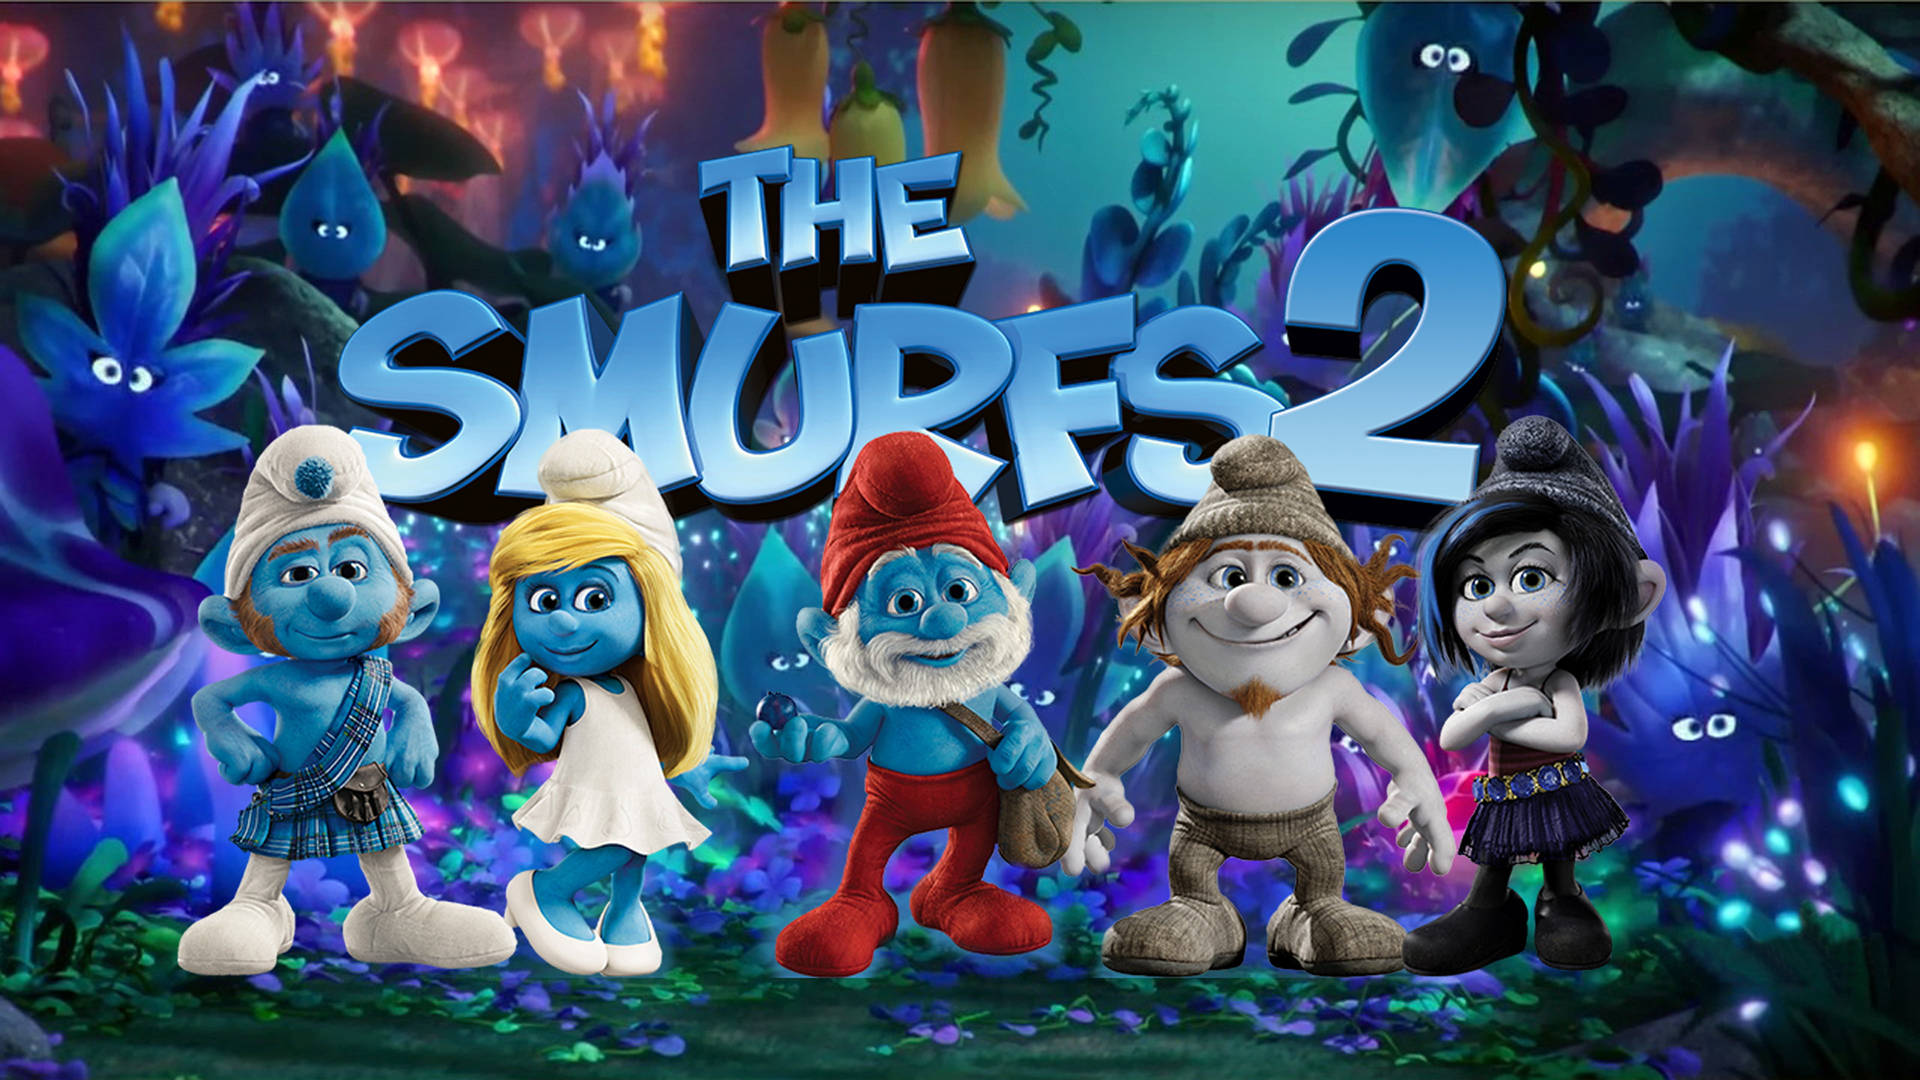 The Smurfs 2 Lost Village Poster Background